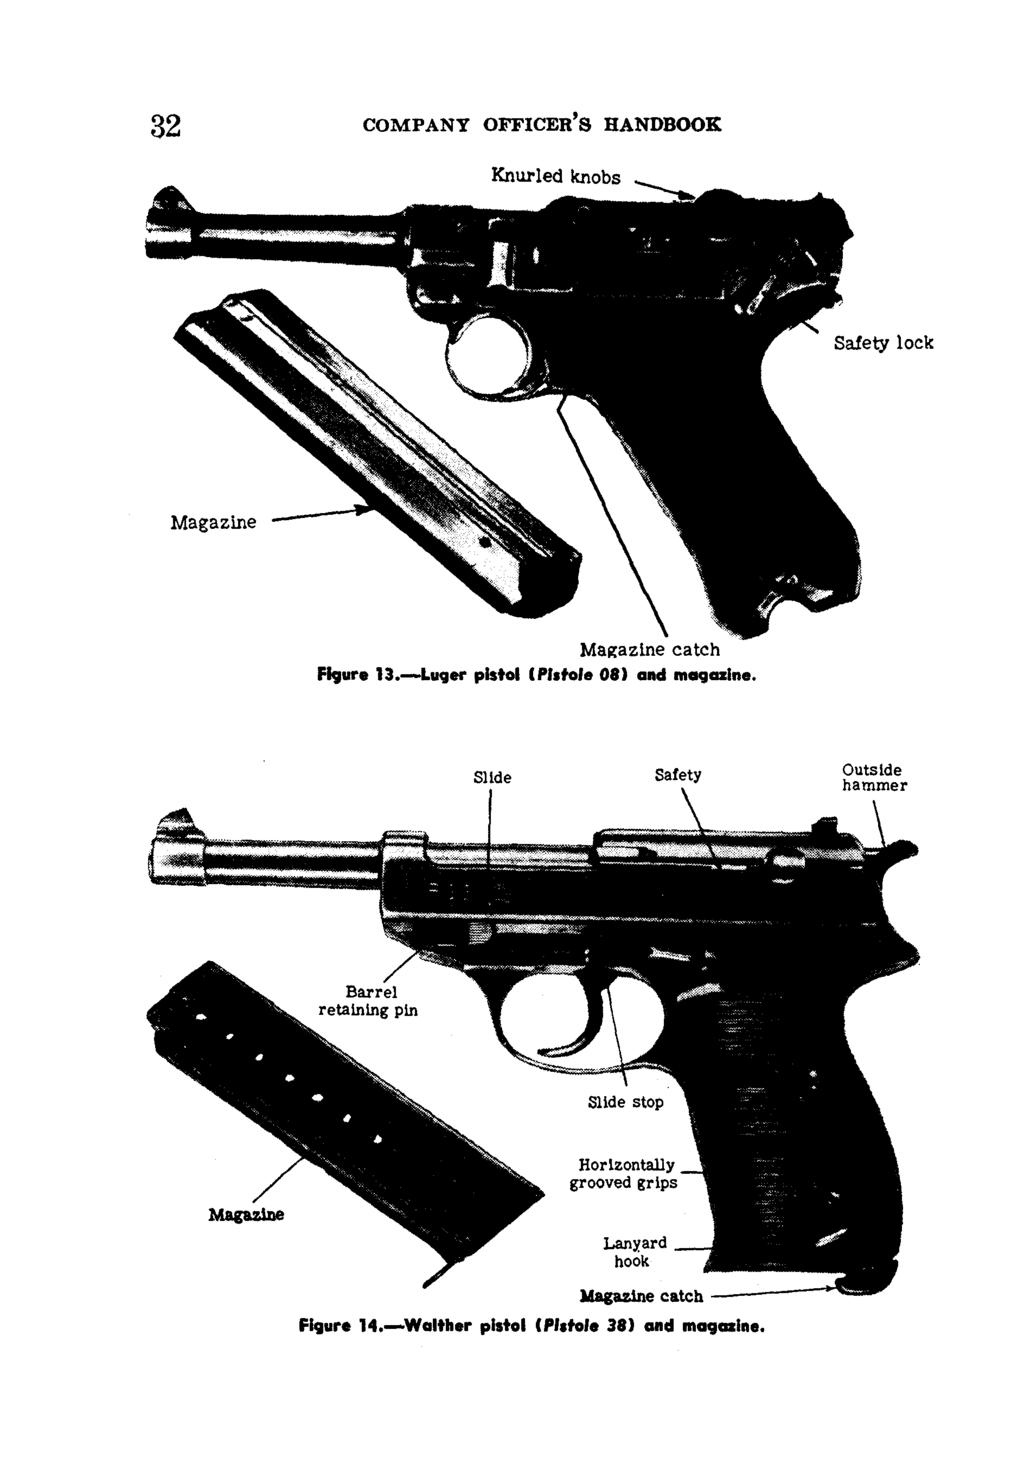 32 COMPANY OFFICER'S HANDBOOK Knurled knobs Safety lock Magazine Magazine catch Figure 13.-Luger pistol (Pistole 08) and magazine.